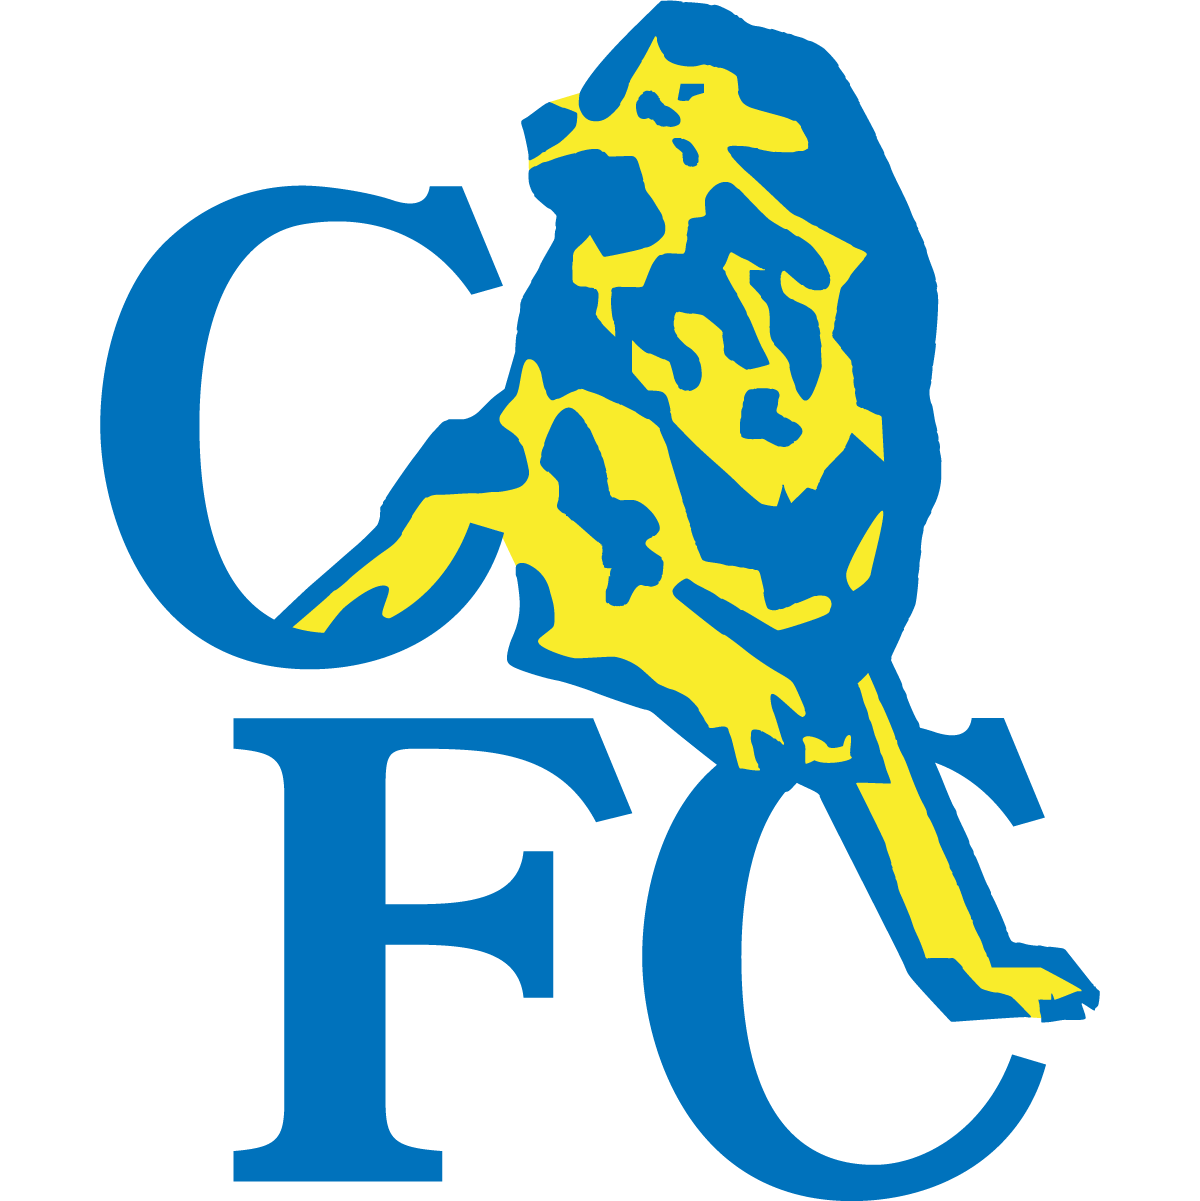 Chelsea FC | Logopedia | Fandom powered by Wikia